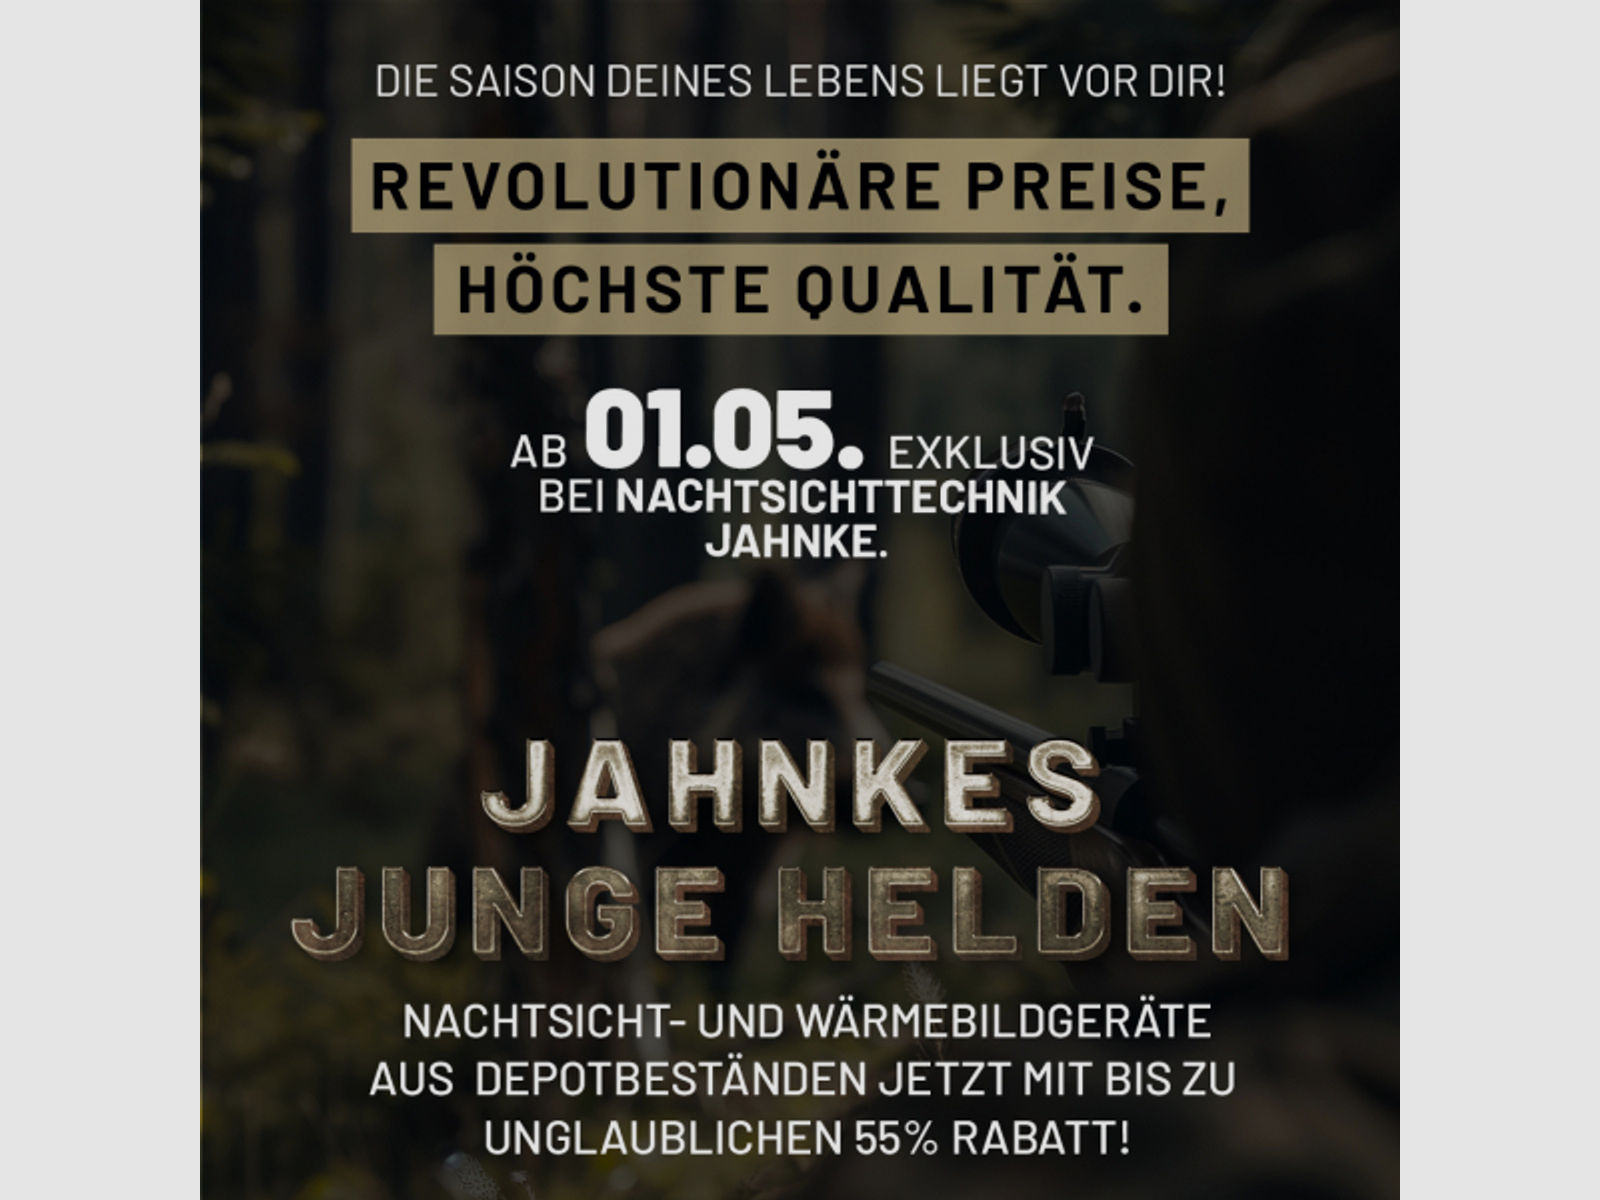 Nachtsichttechnik Jahnke DJ-8 4x48 JJH LK 3 S 1, Jahnke Monochrom (Grau)